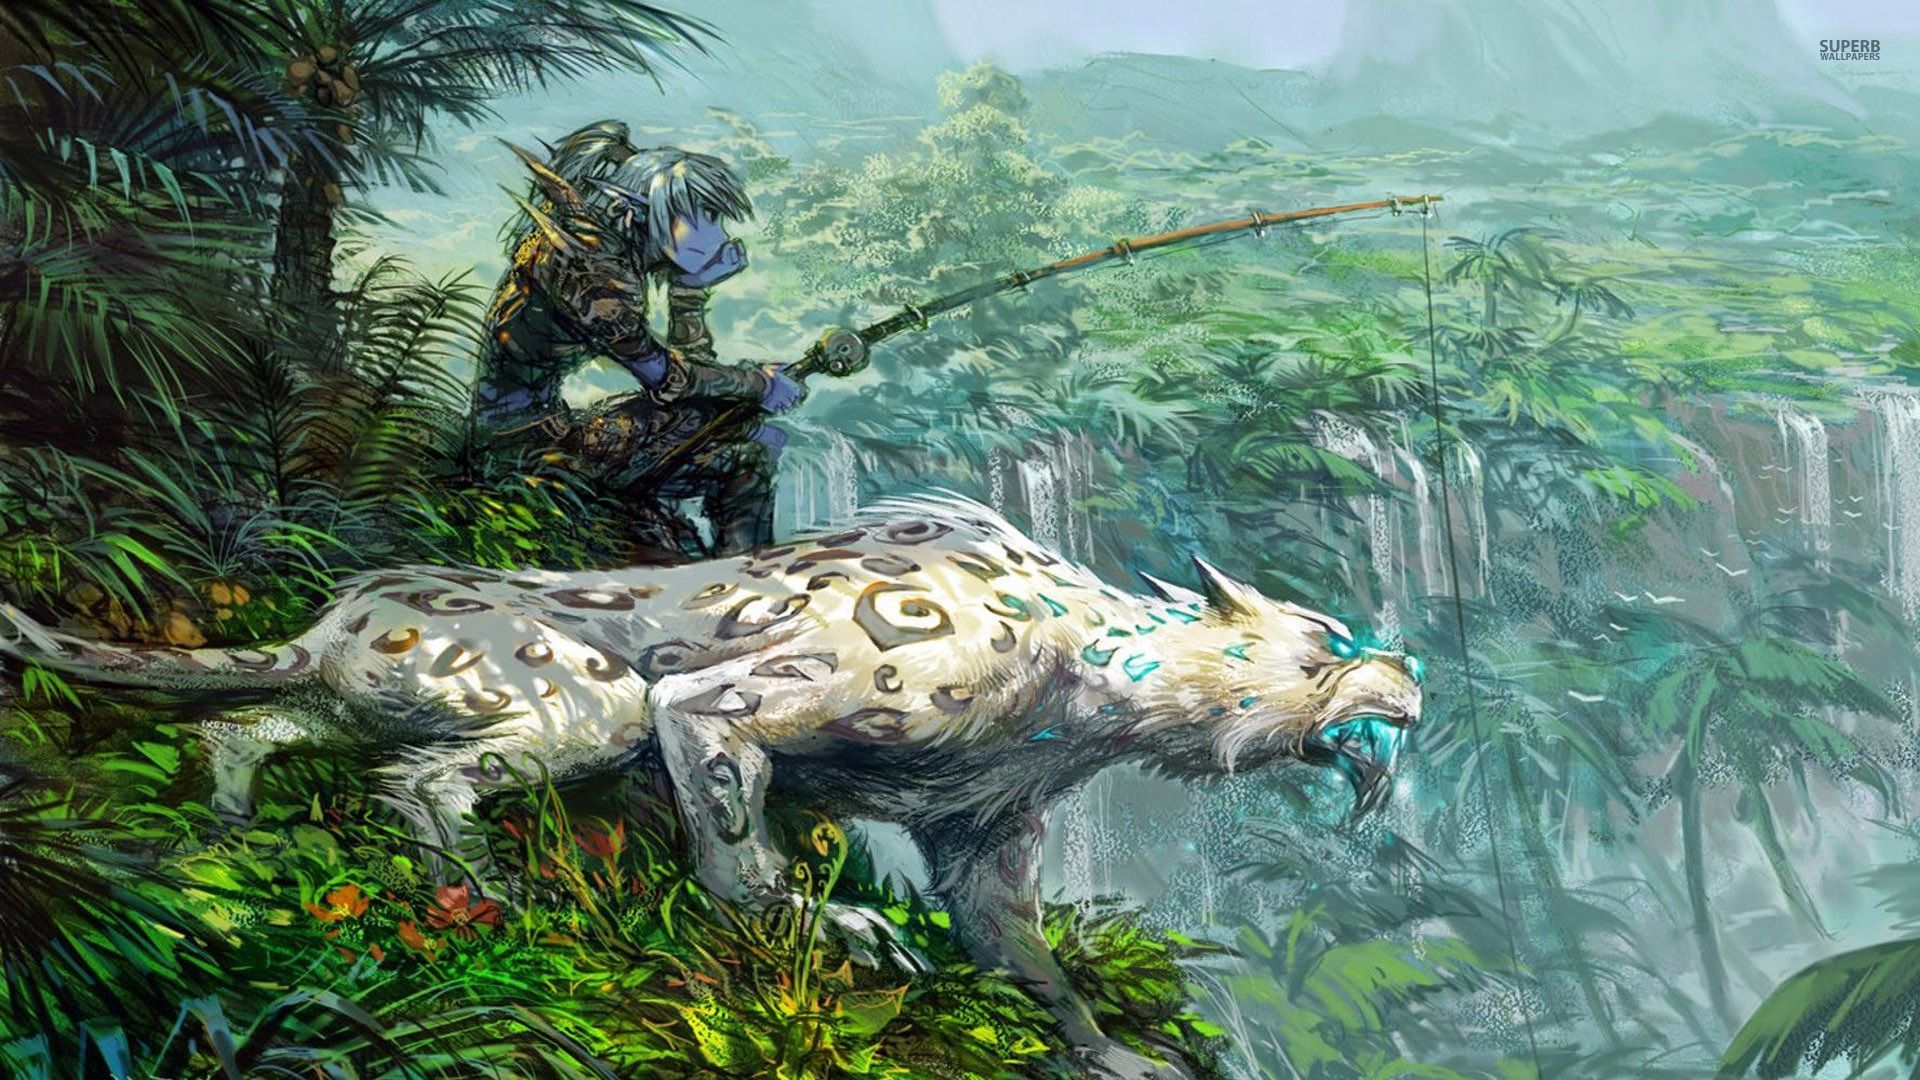 Hunter - World of Warcraft wallpaper - Game wallpapers -